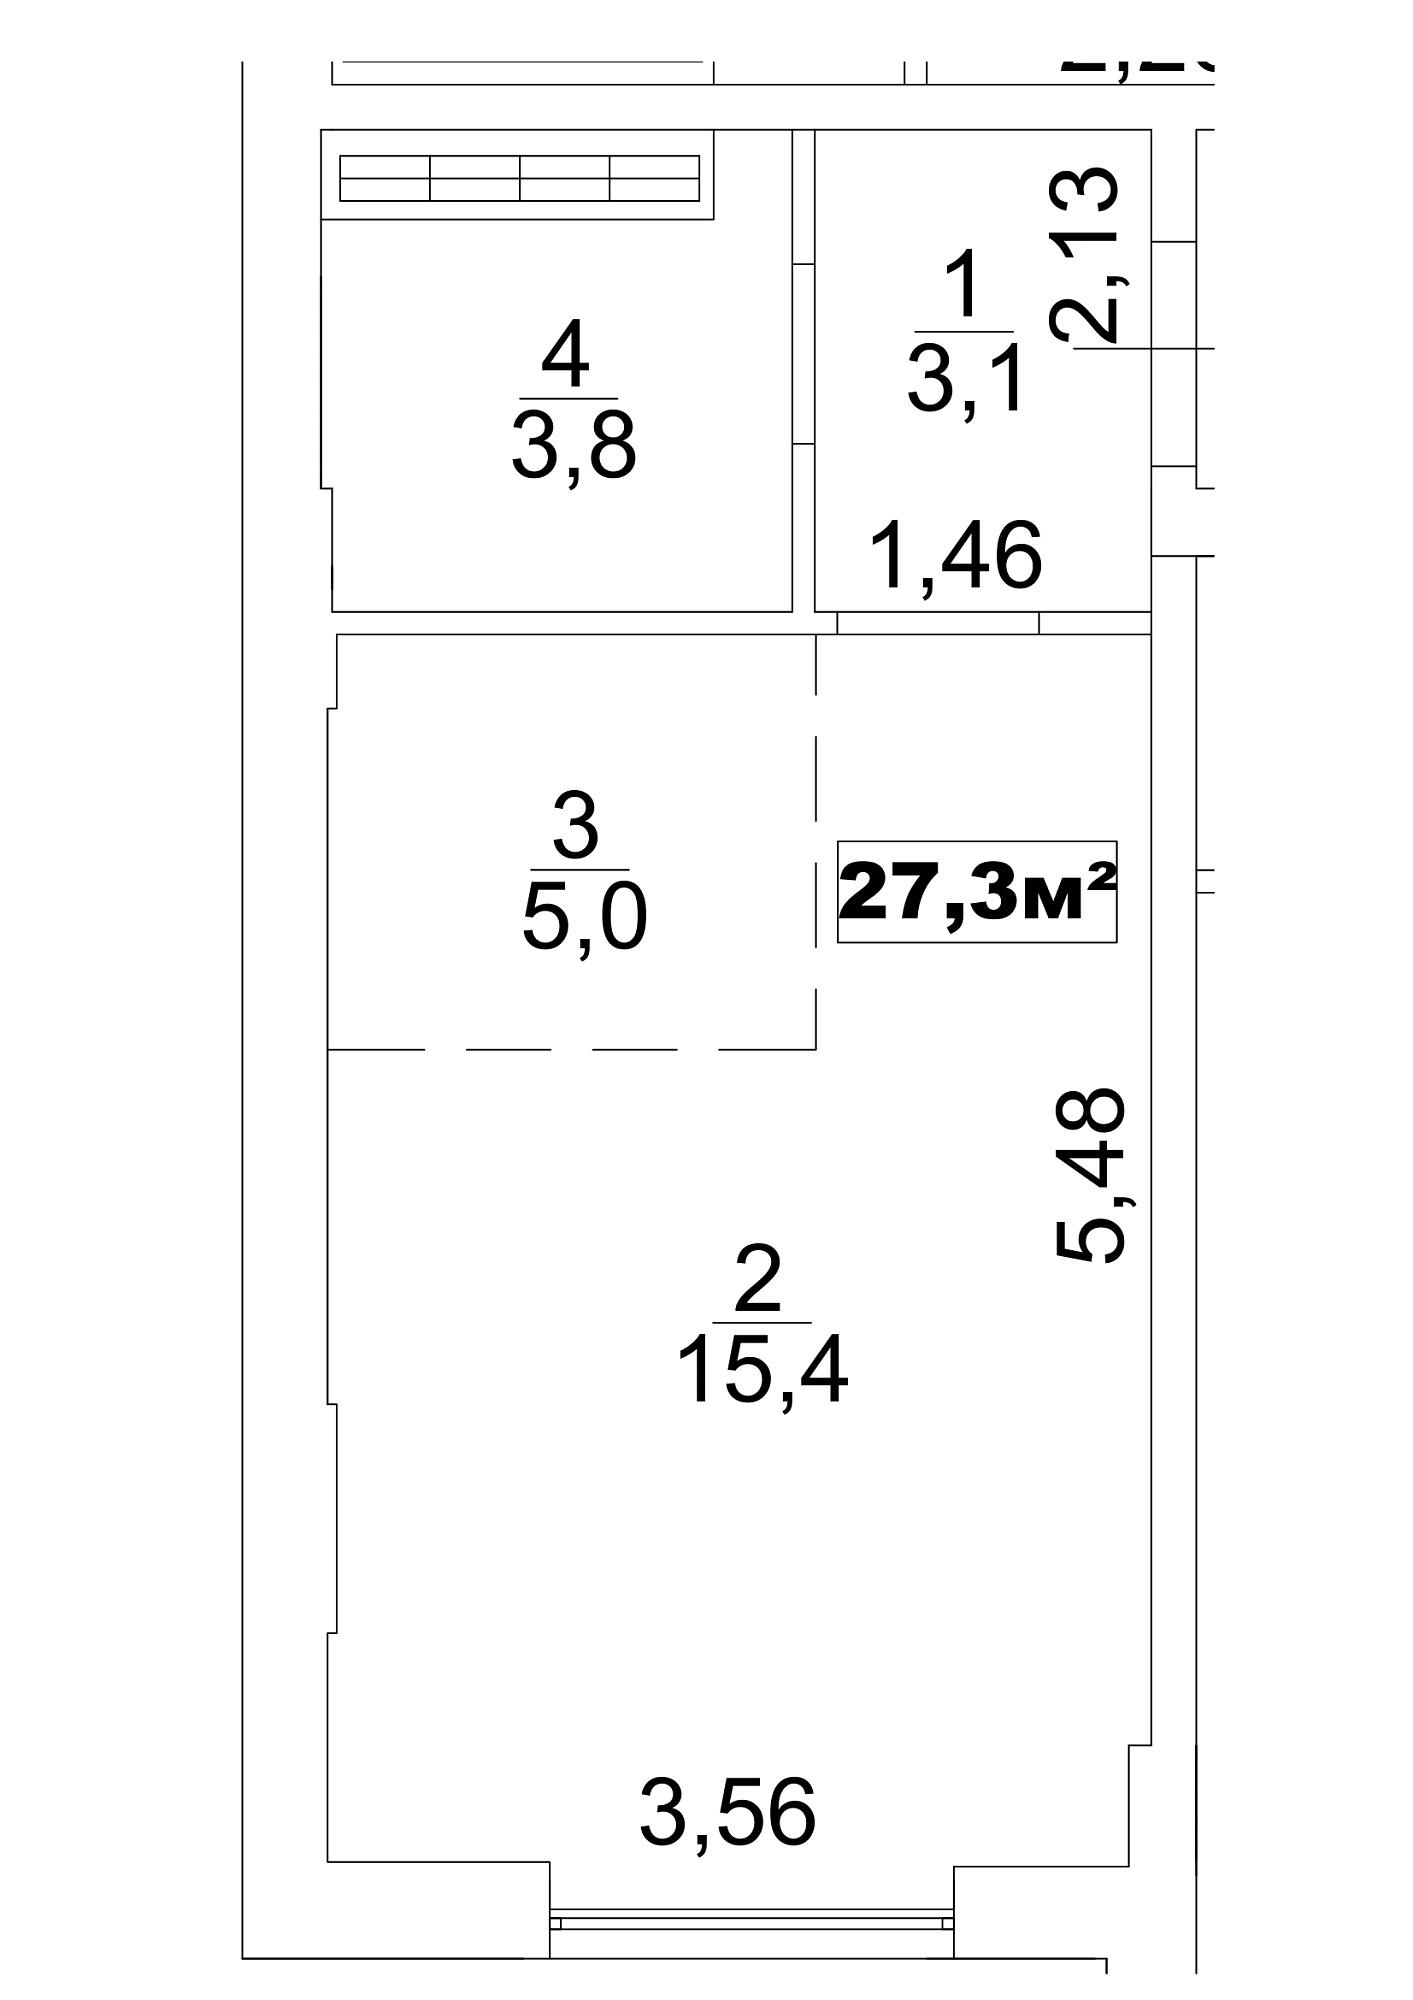 Planning Smart flats area 27.3m2, AB-13-05/0036а.